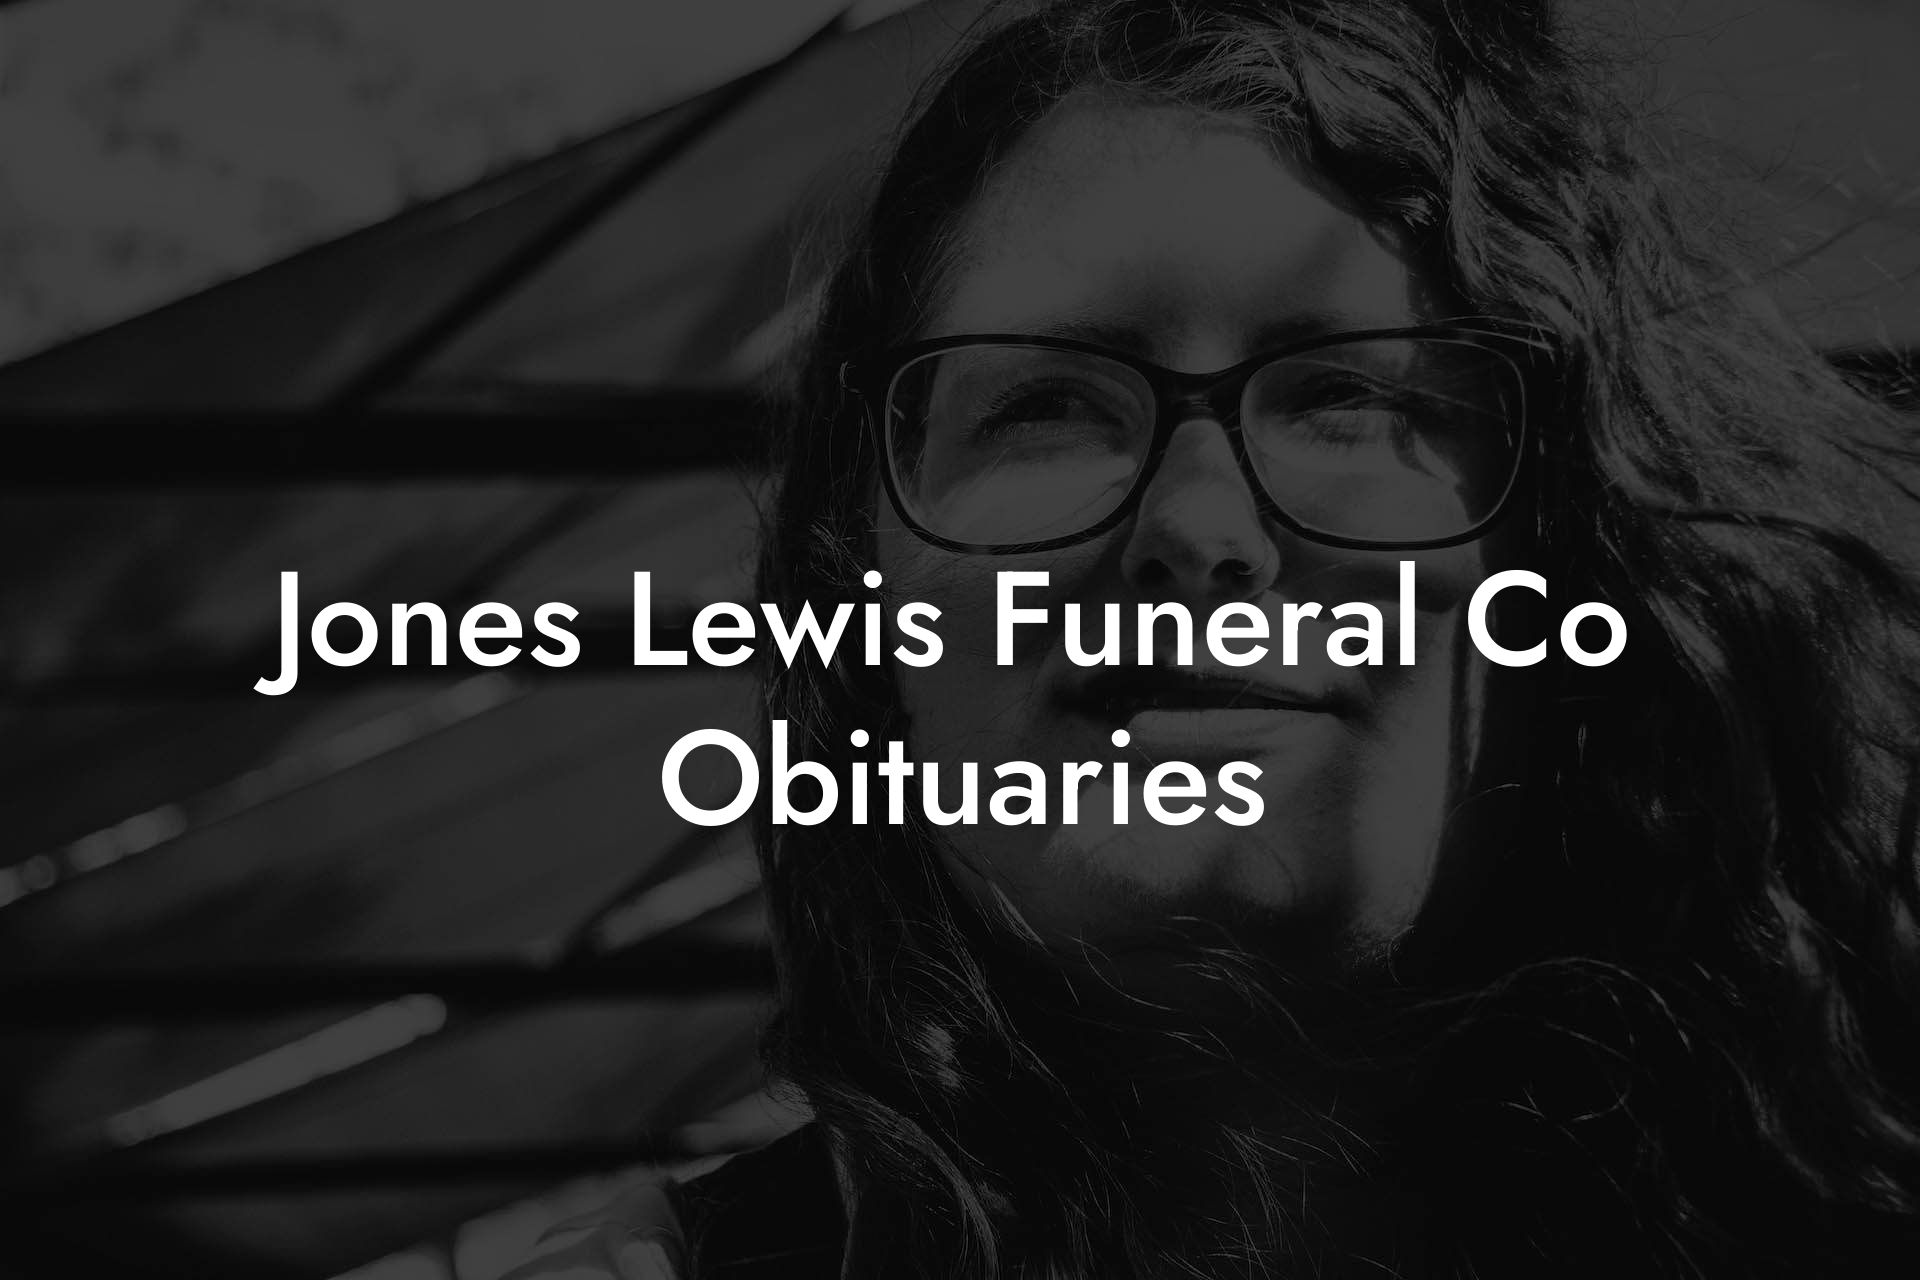 Jones Lewis Funeral Co Obituaries